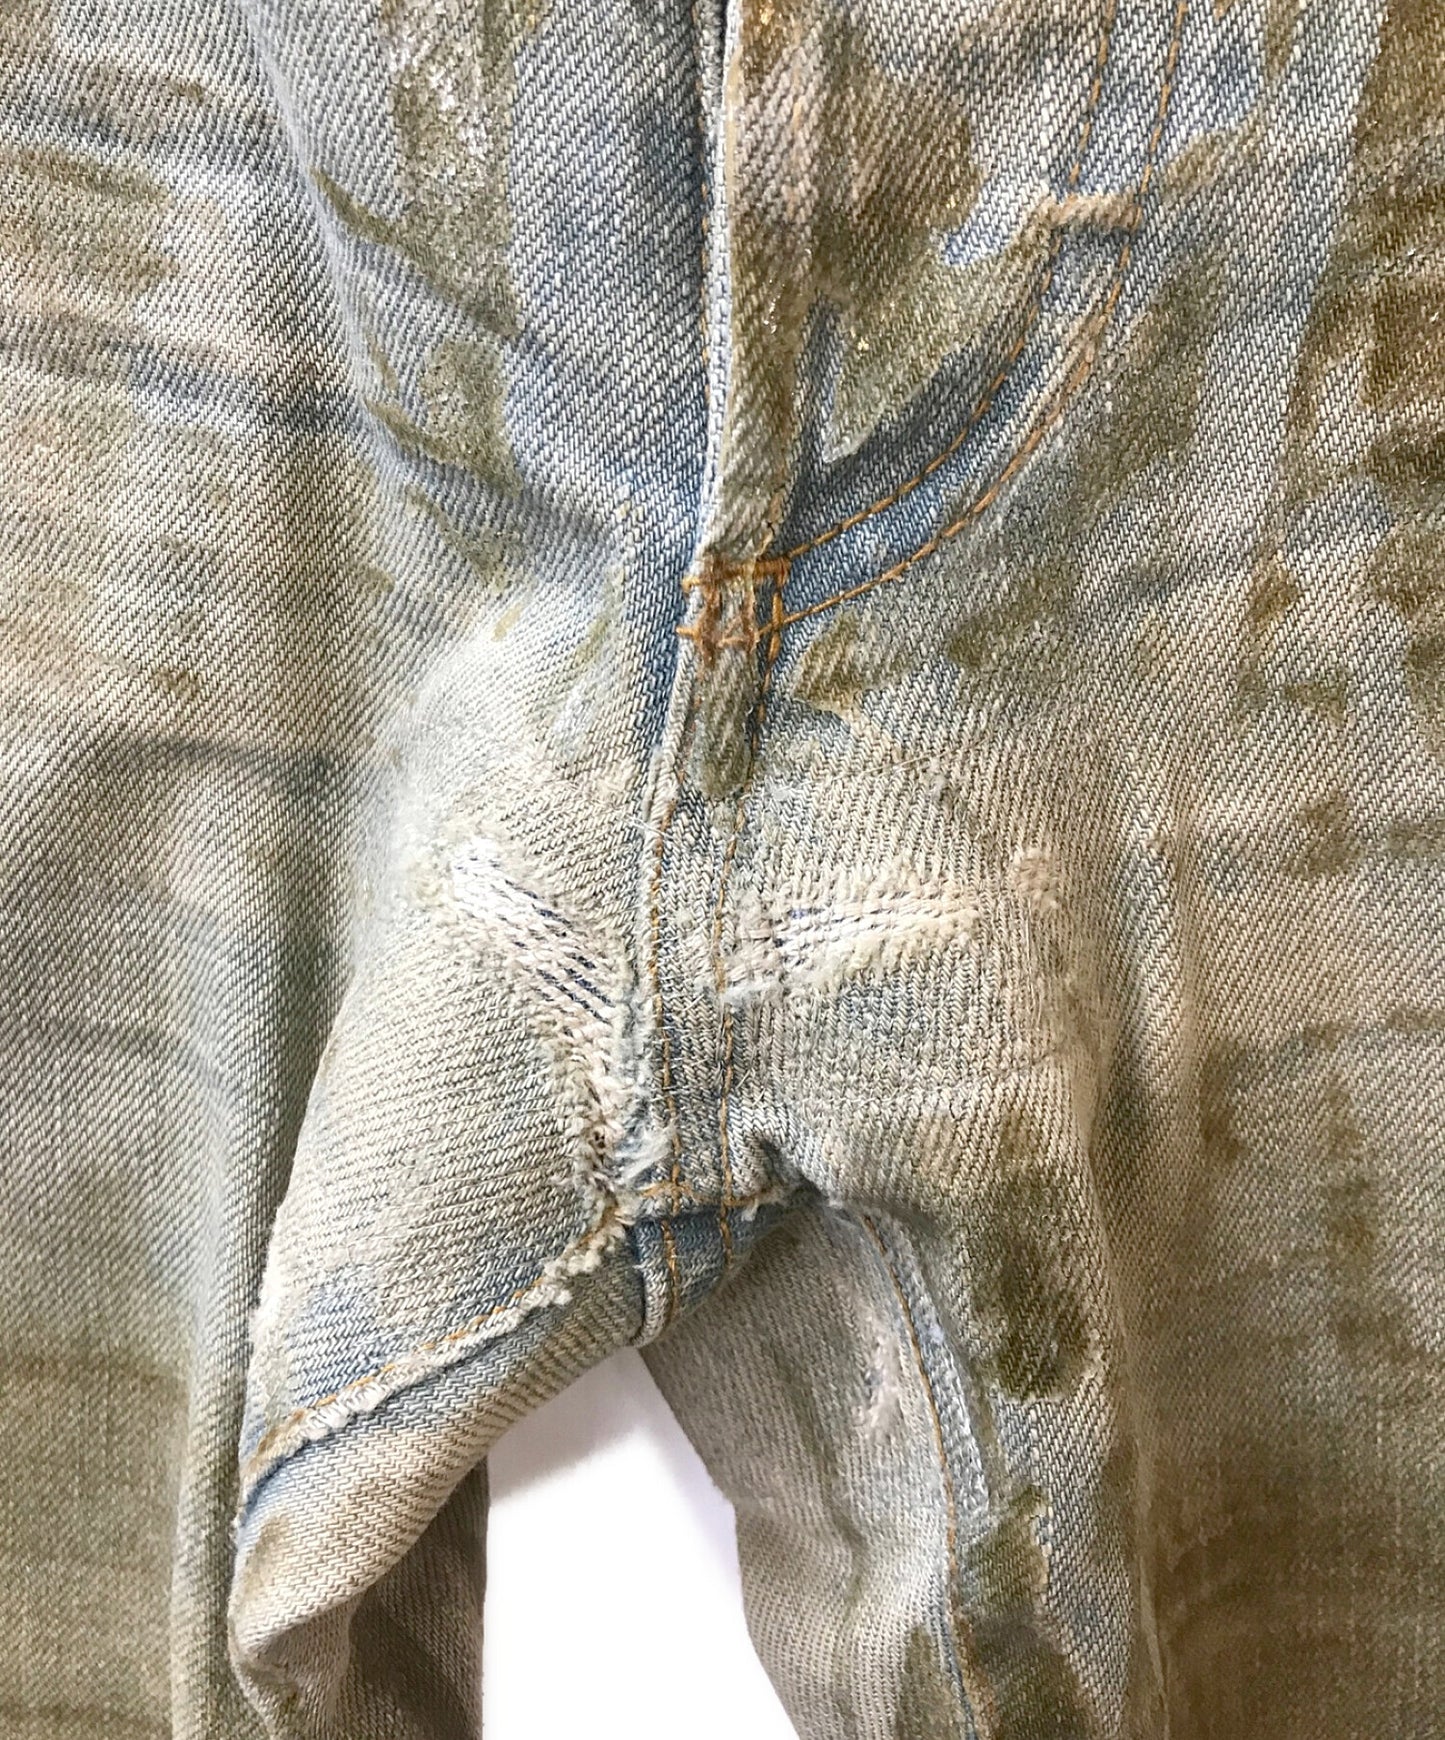 Dior Homme 04SS冰藍色矽塗層牛仔布褲